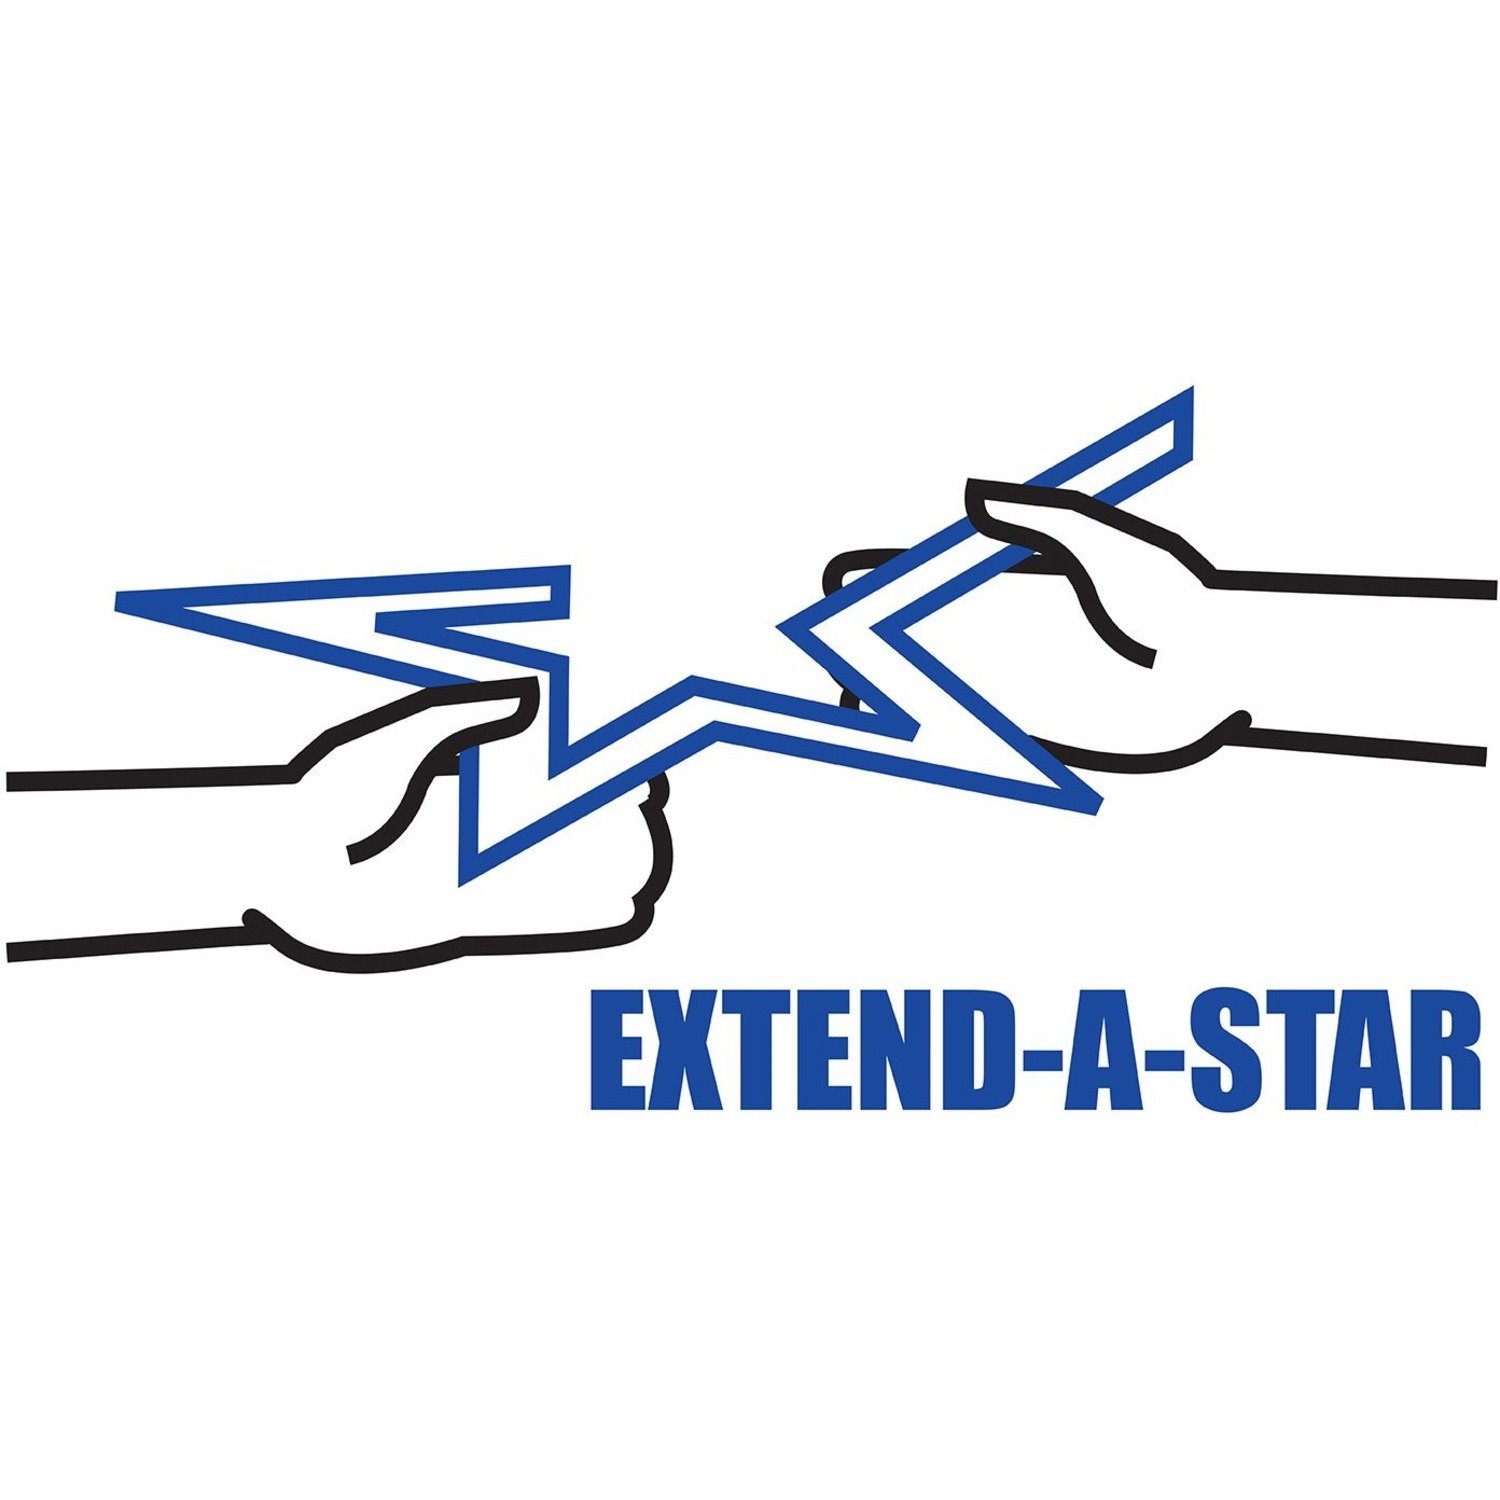 Star Micronics Extend-A-Star - Extended Warranty - 3 Year - Warranty